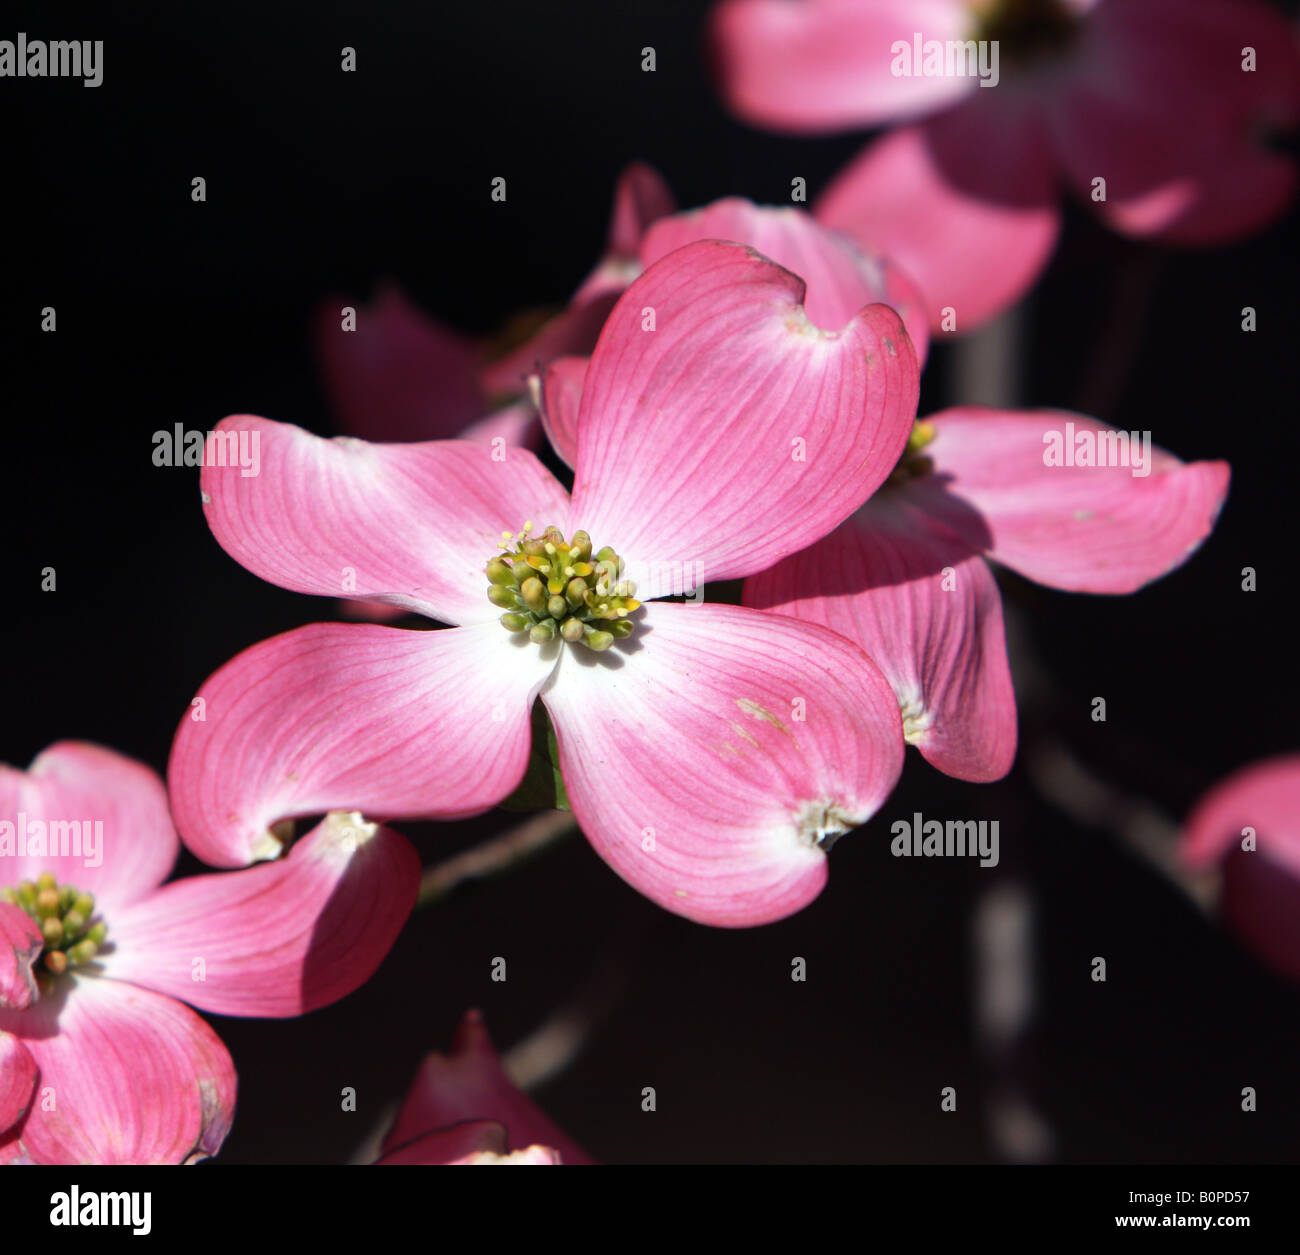 A pink flowering dogwood cornus florida rubra. Stock Photo